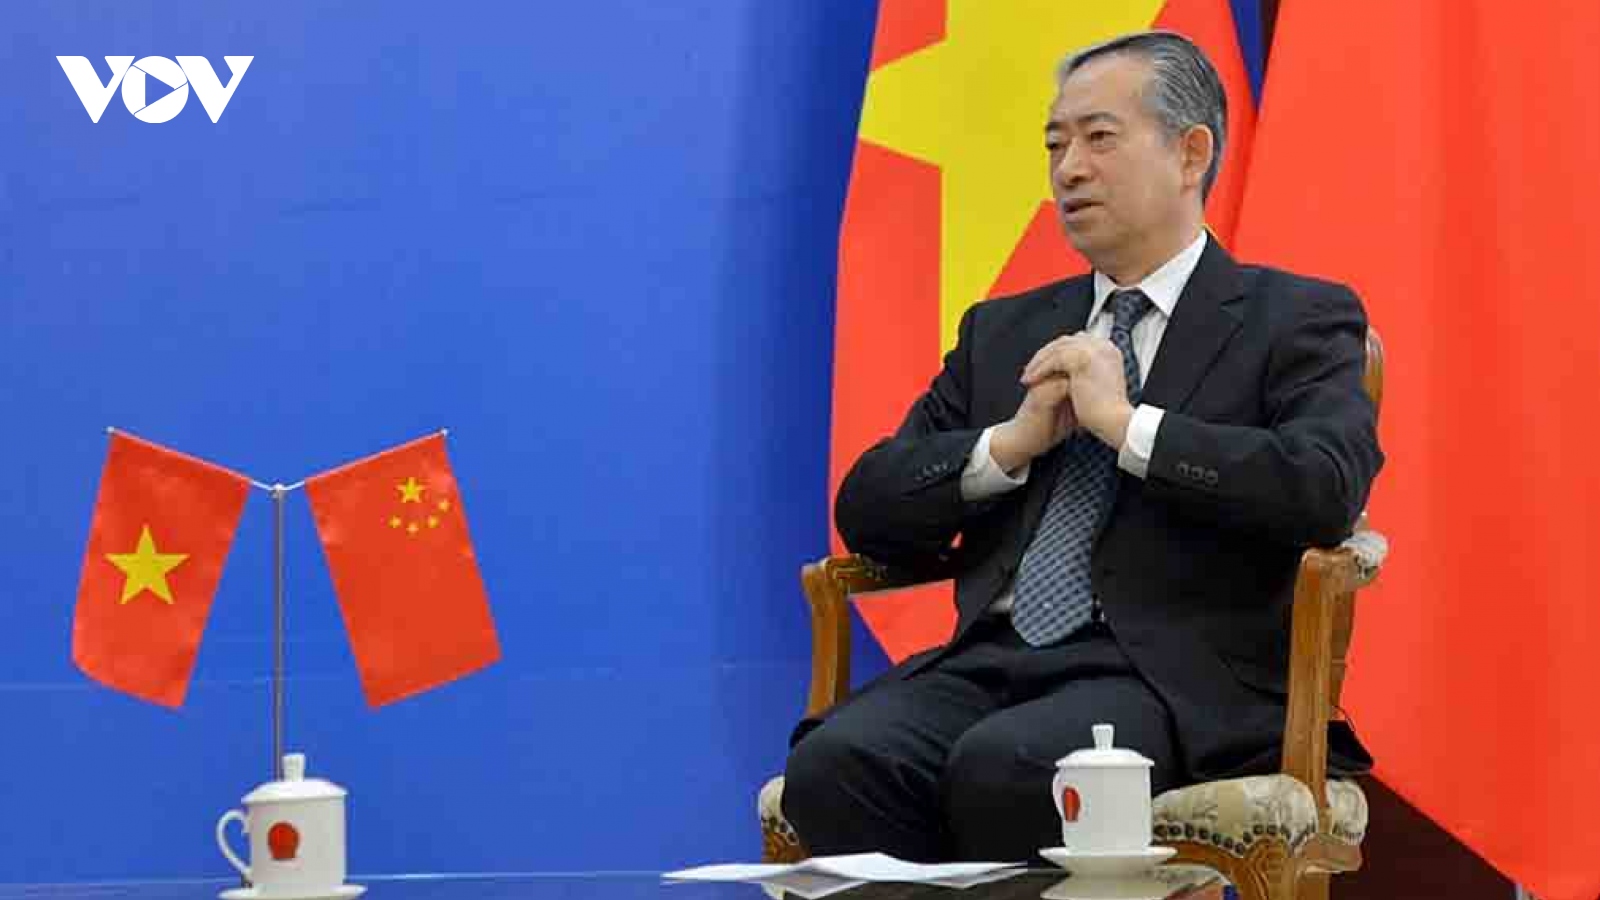 Ambassador Bo confident of stronger development of Vietnam - China relations